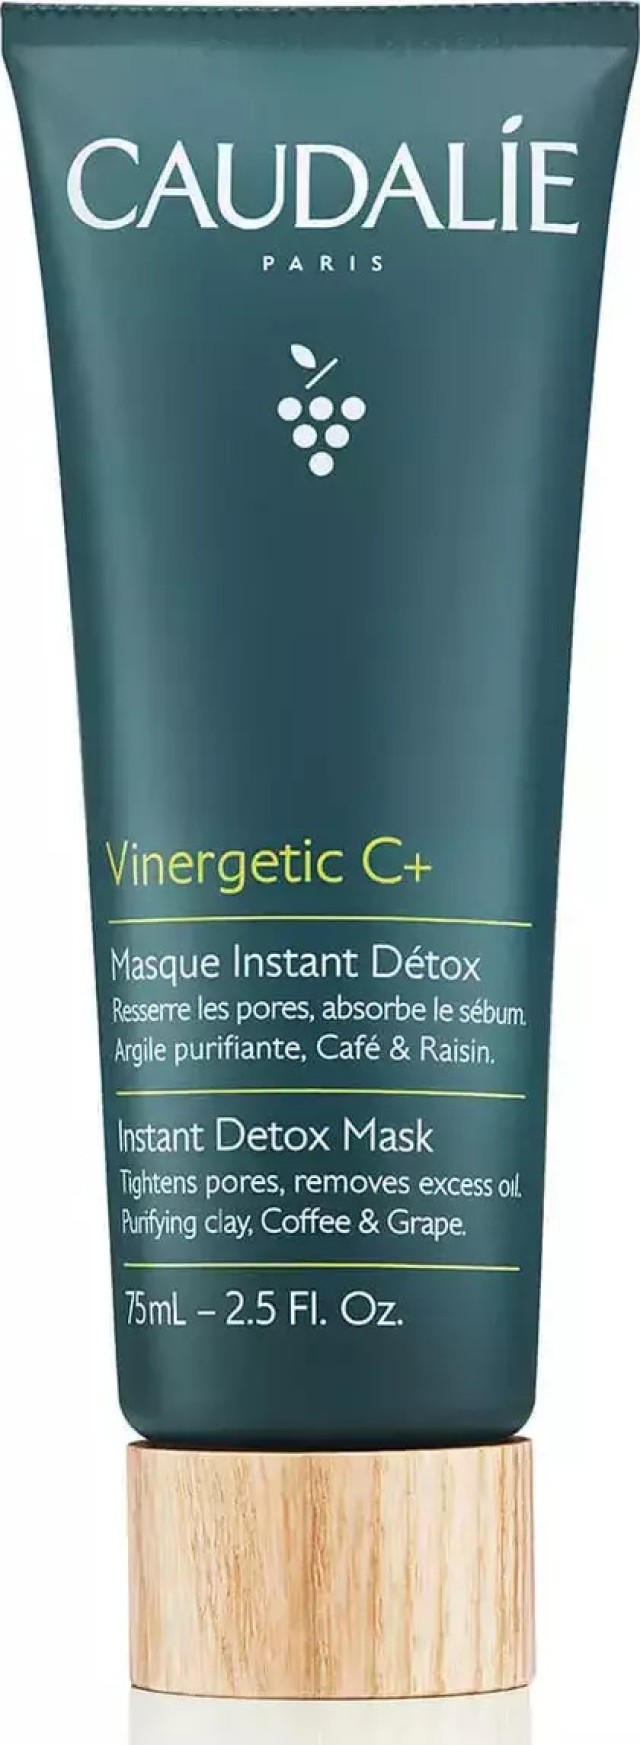 Caudalie Vinergetic C+ Instant Detox Mask Αποτοξινωτική Μάσκα Προσώπου, 75ml